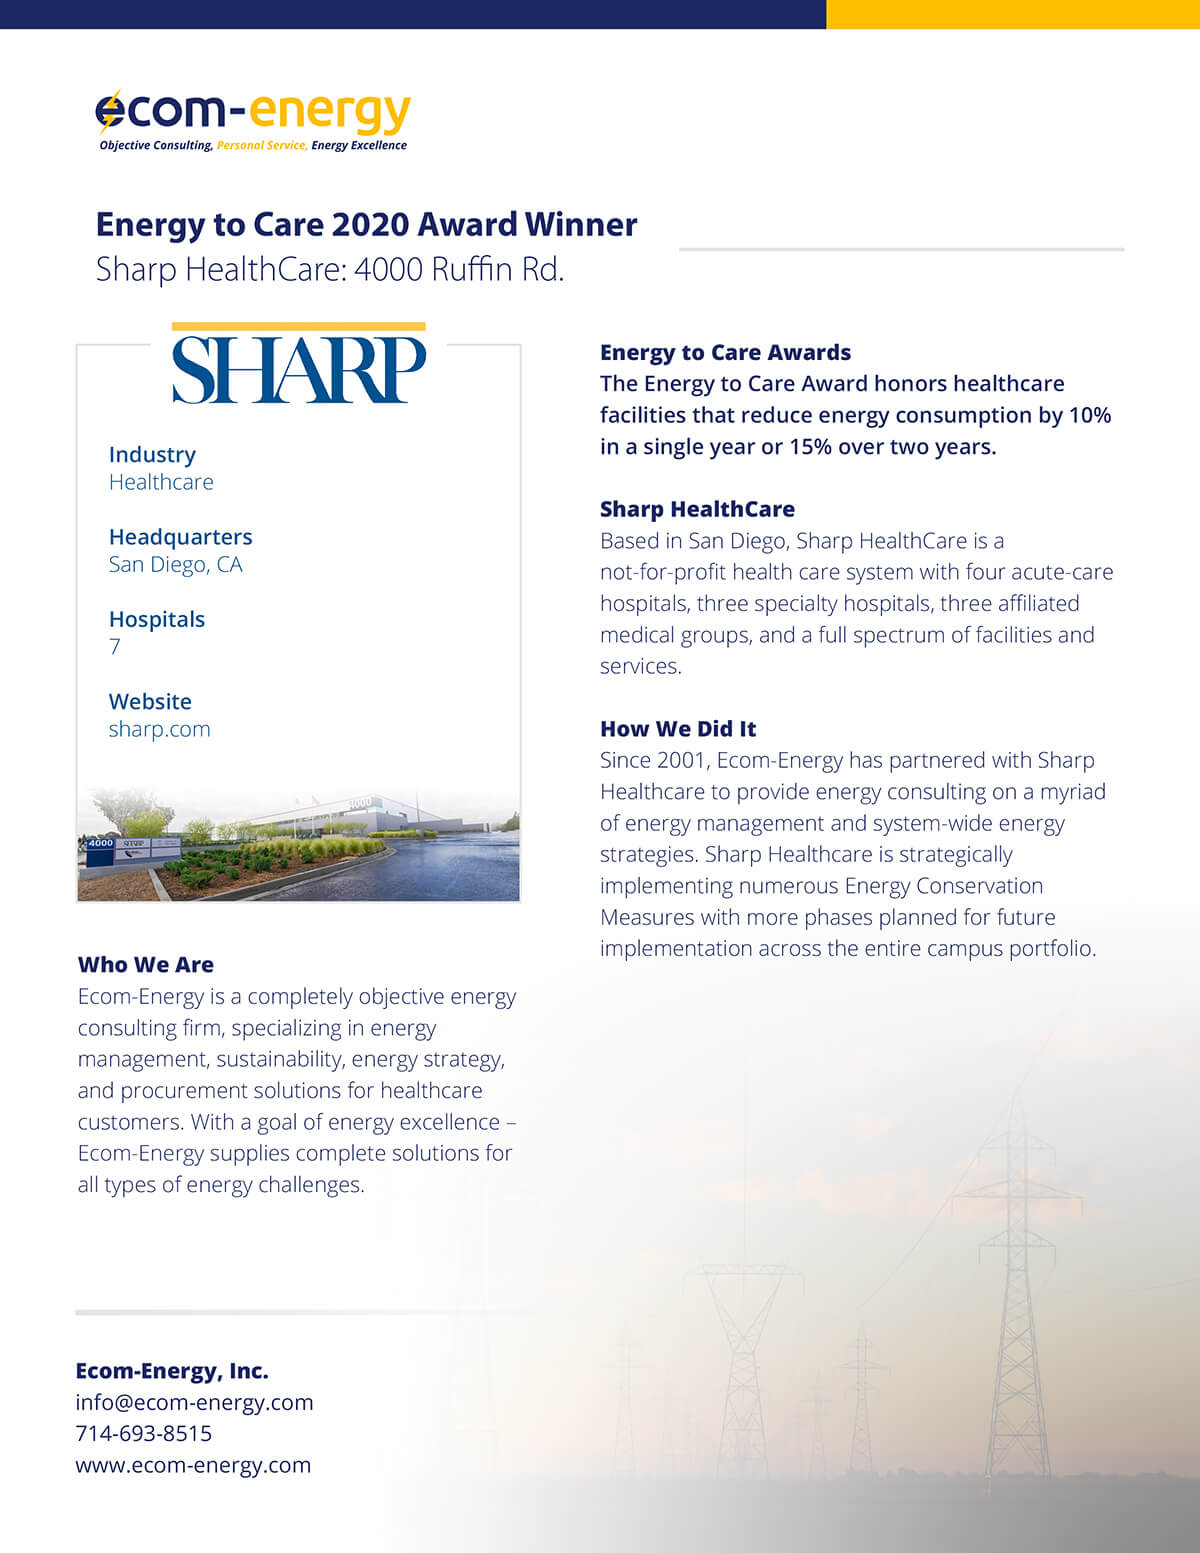 Energy to Care 2020 Award Winner Press Release